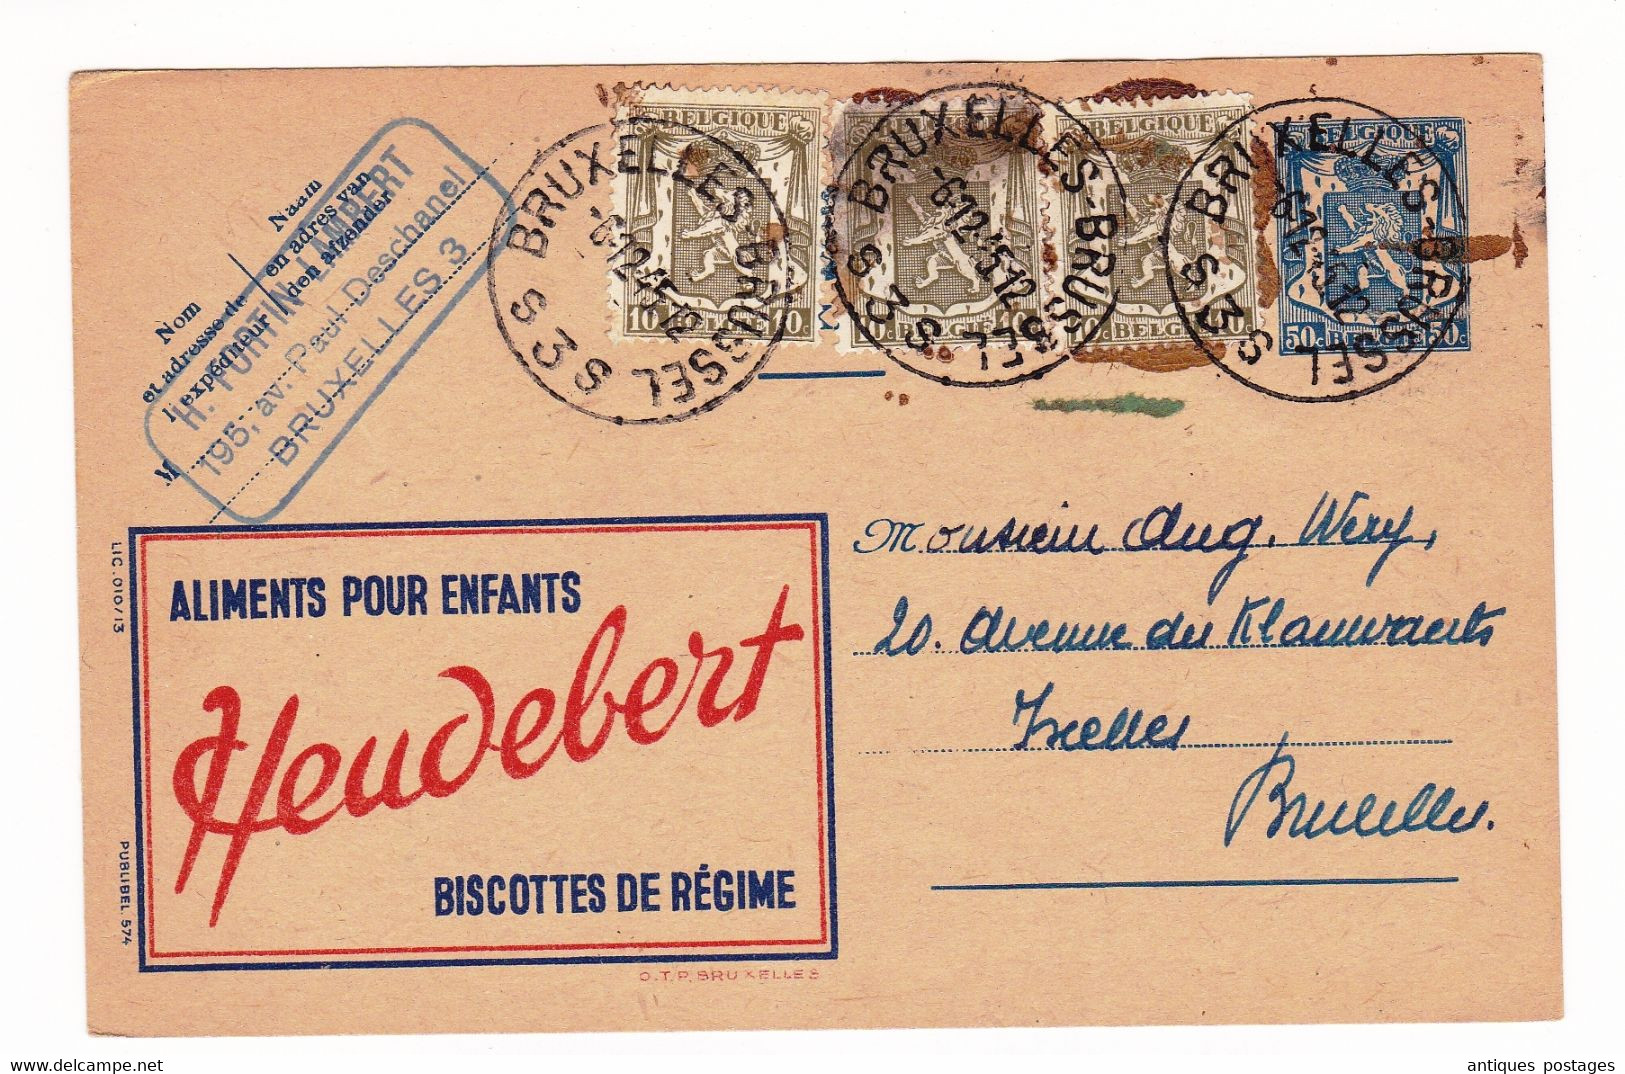 Carte Postale Publicitaire Biscottes Heudebert 1945 Bruxelles Belgique Fortin Lambert 195 Avenue Paul Deschanel - Postcards 1934-1951